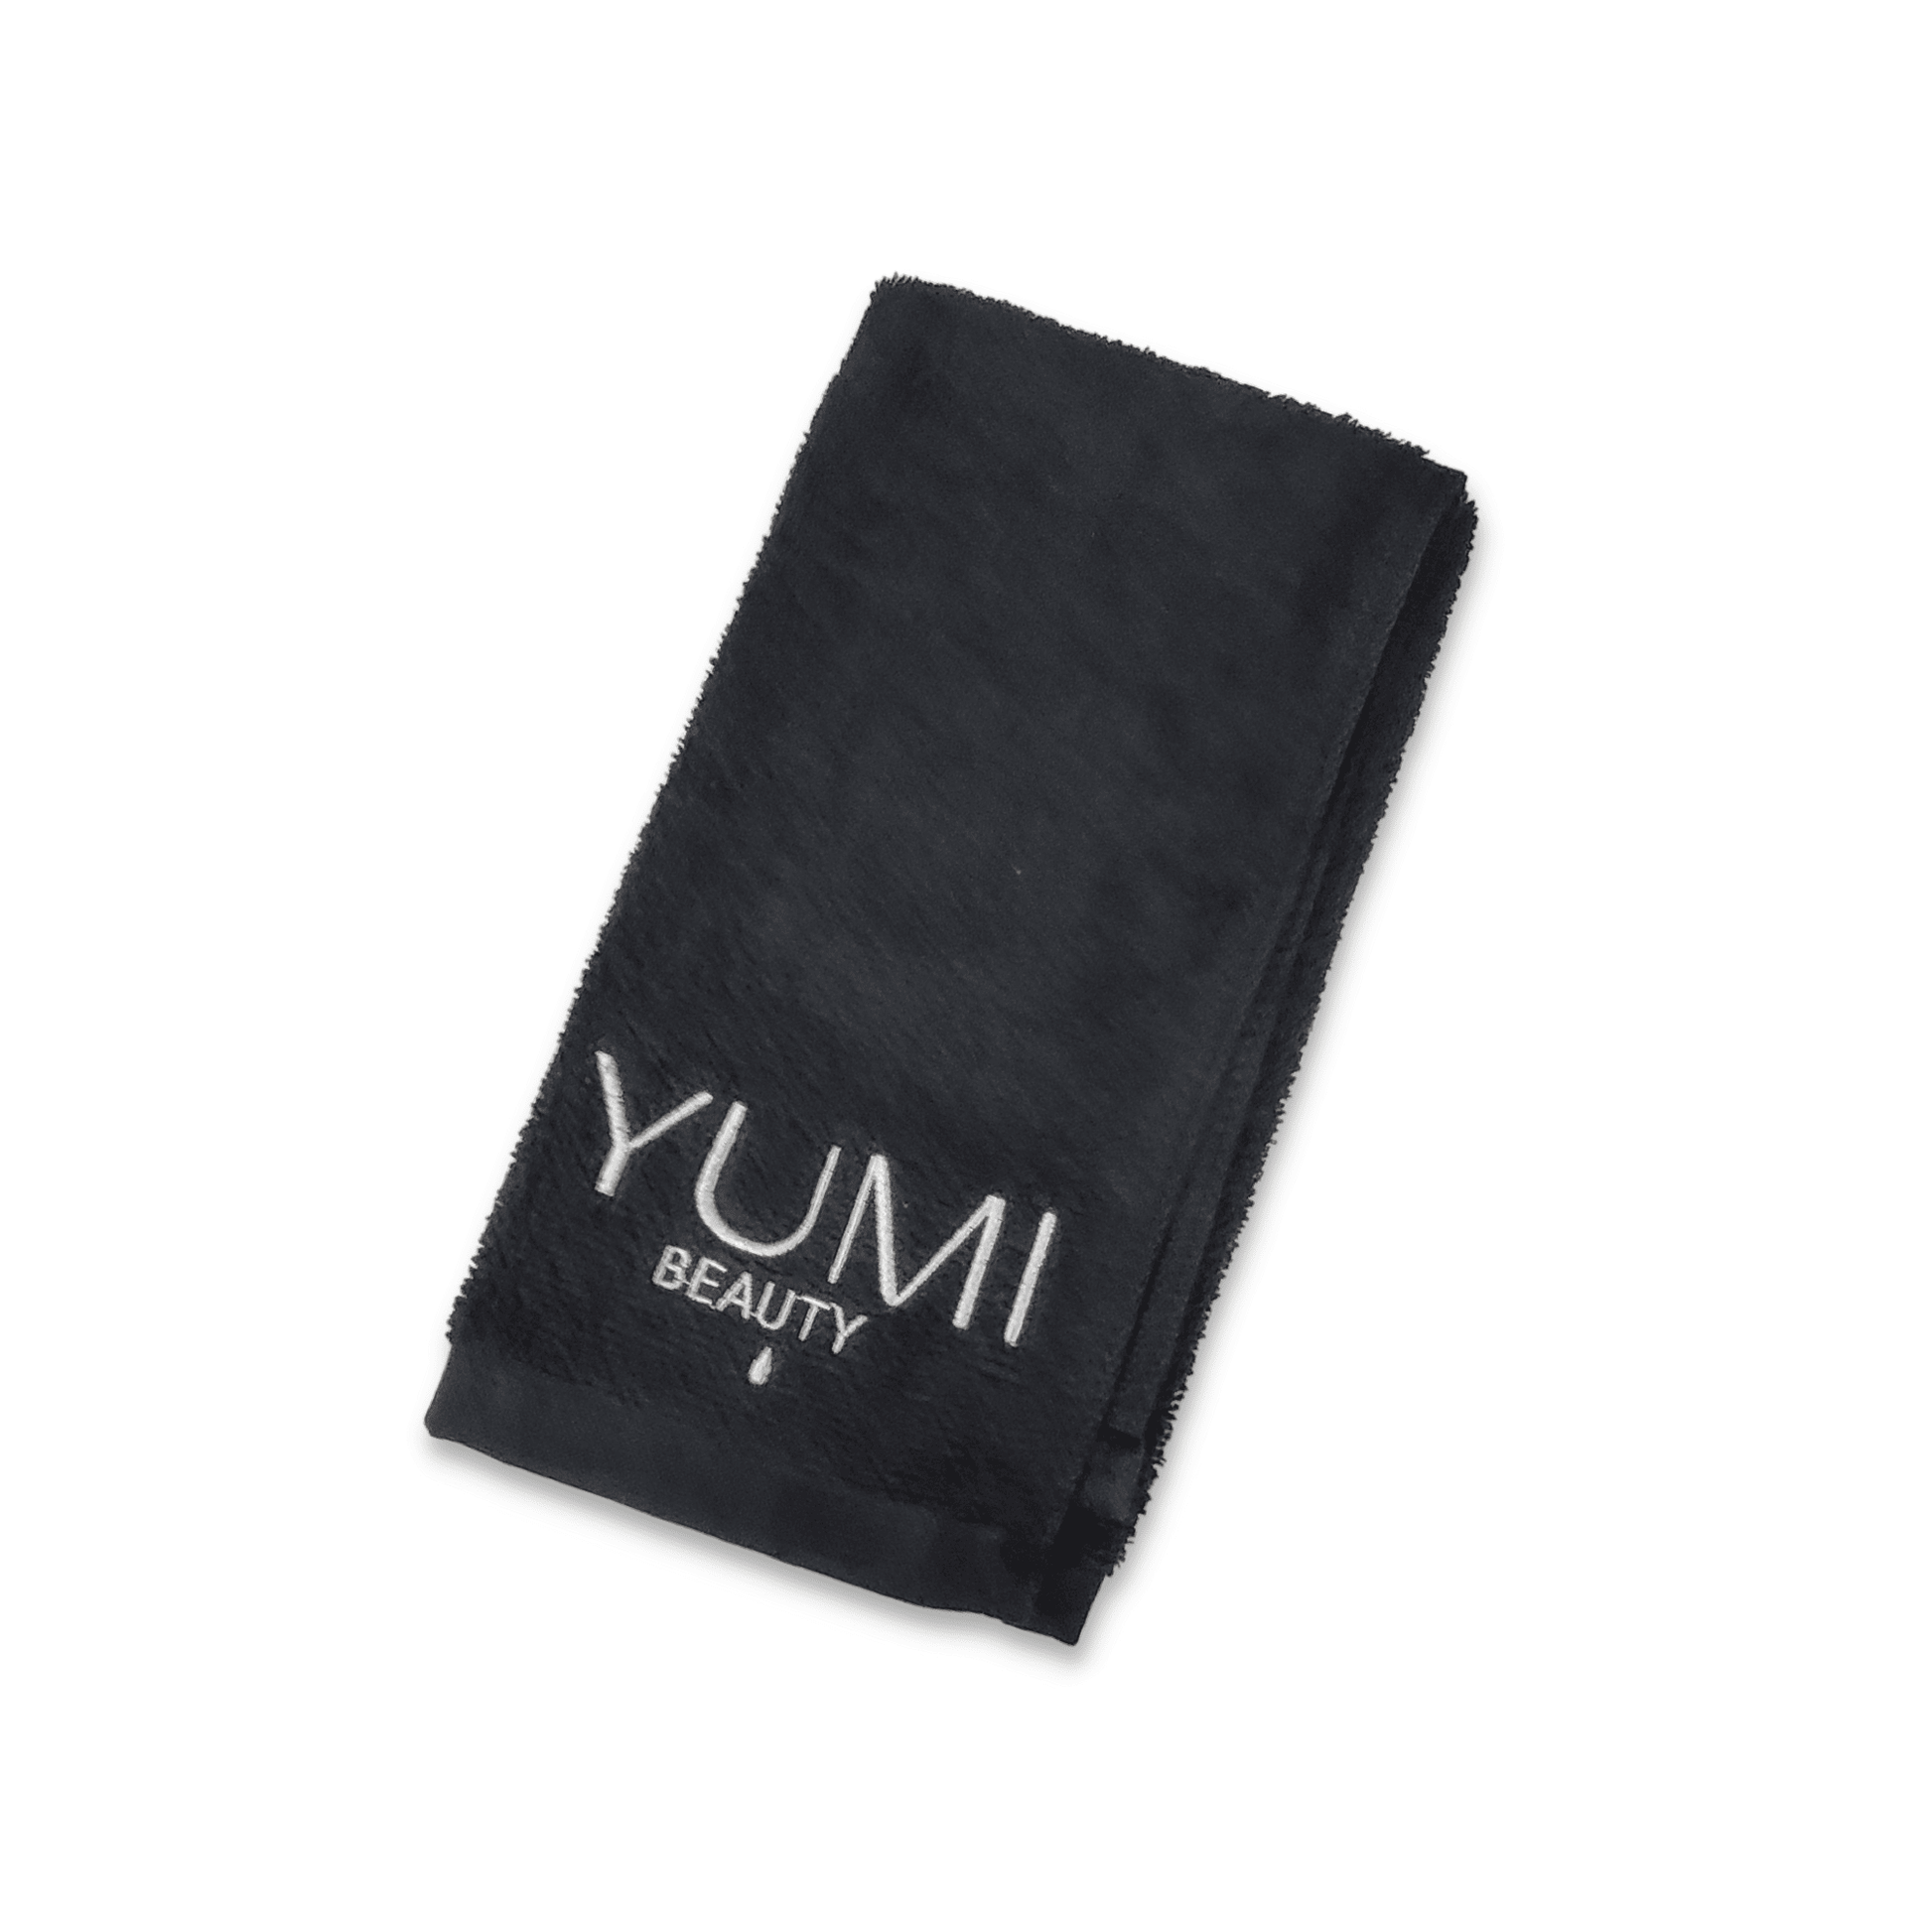 Yumi Beauty Black Towel